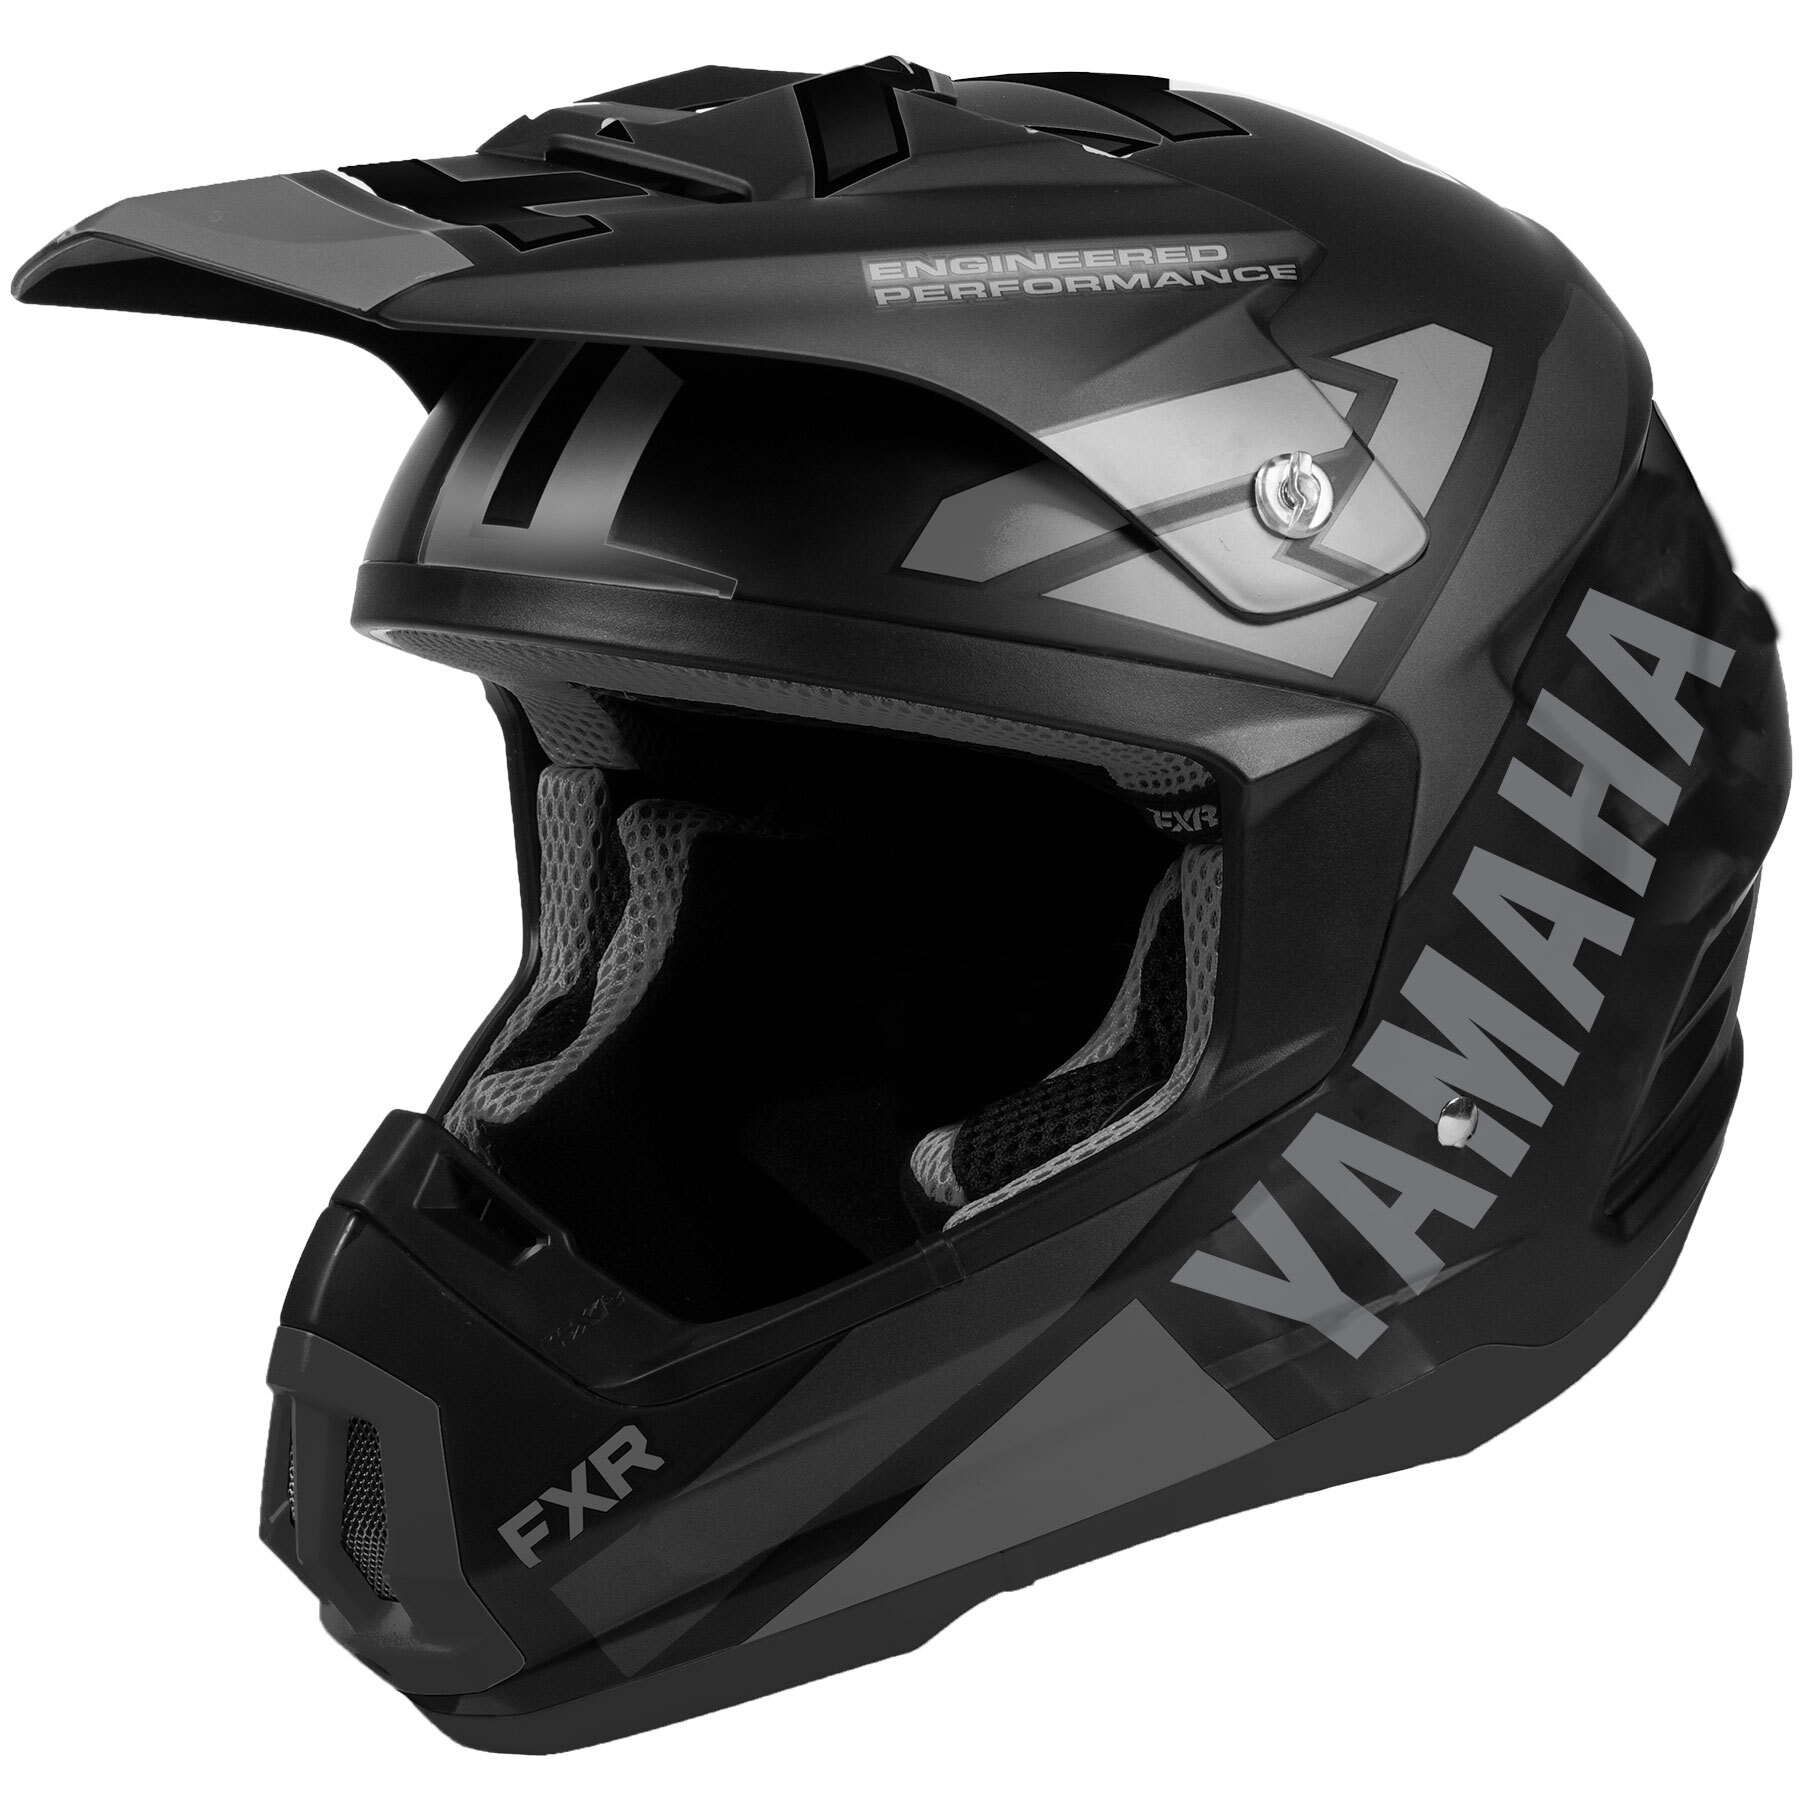 Yamaha Torque Team Helmet by FXR®